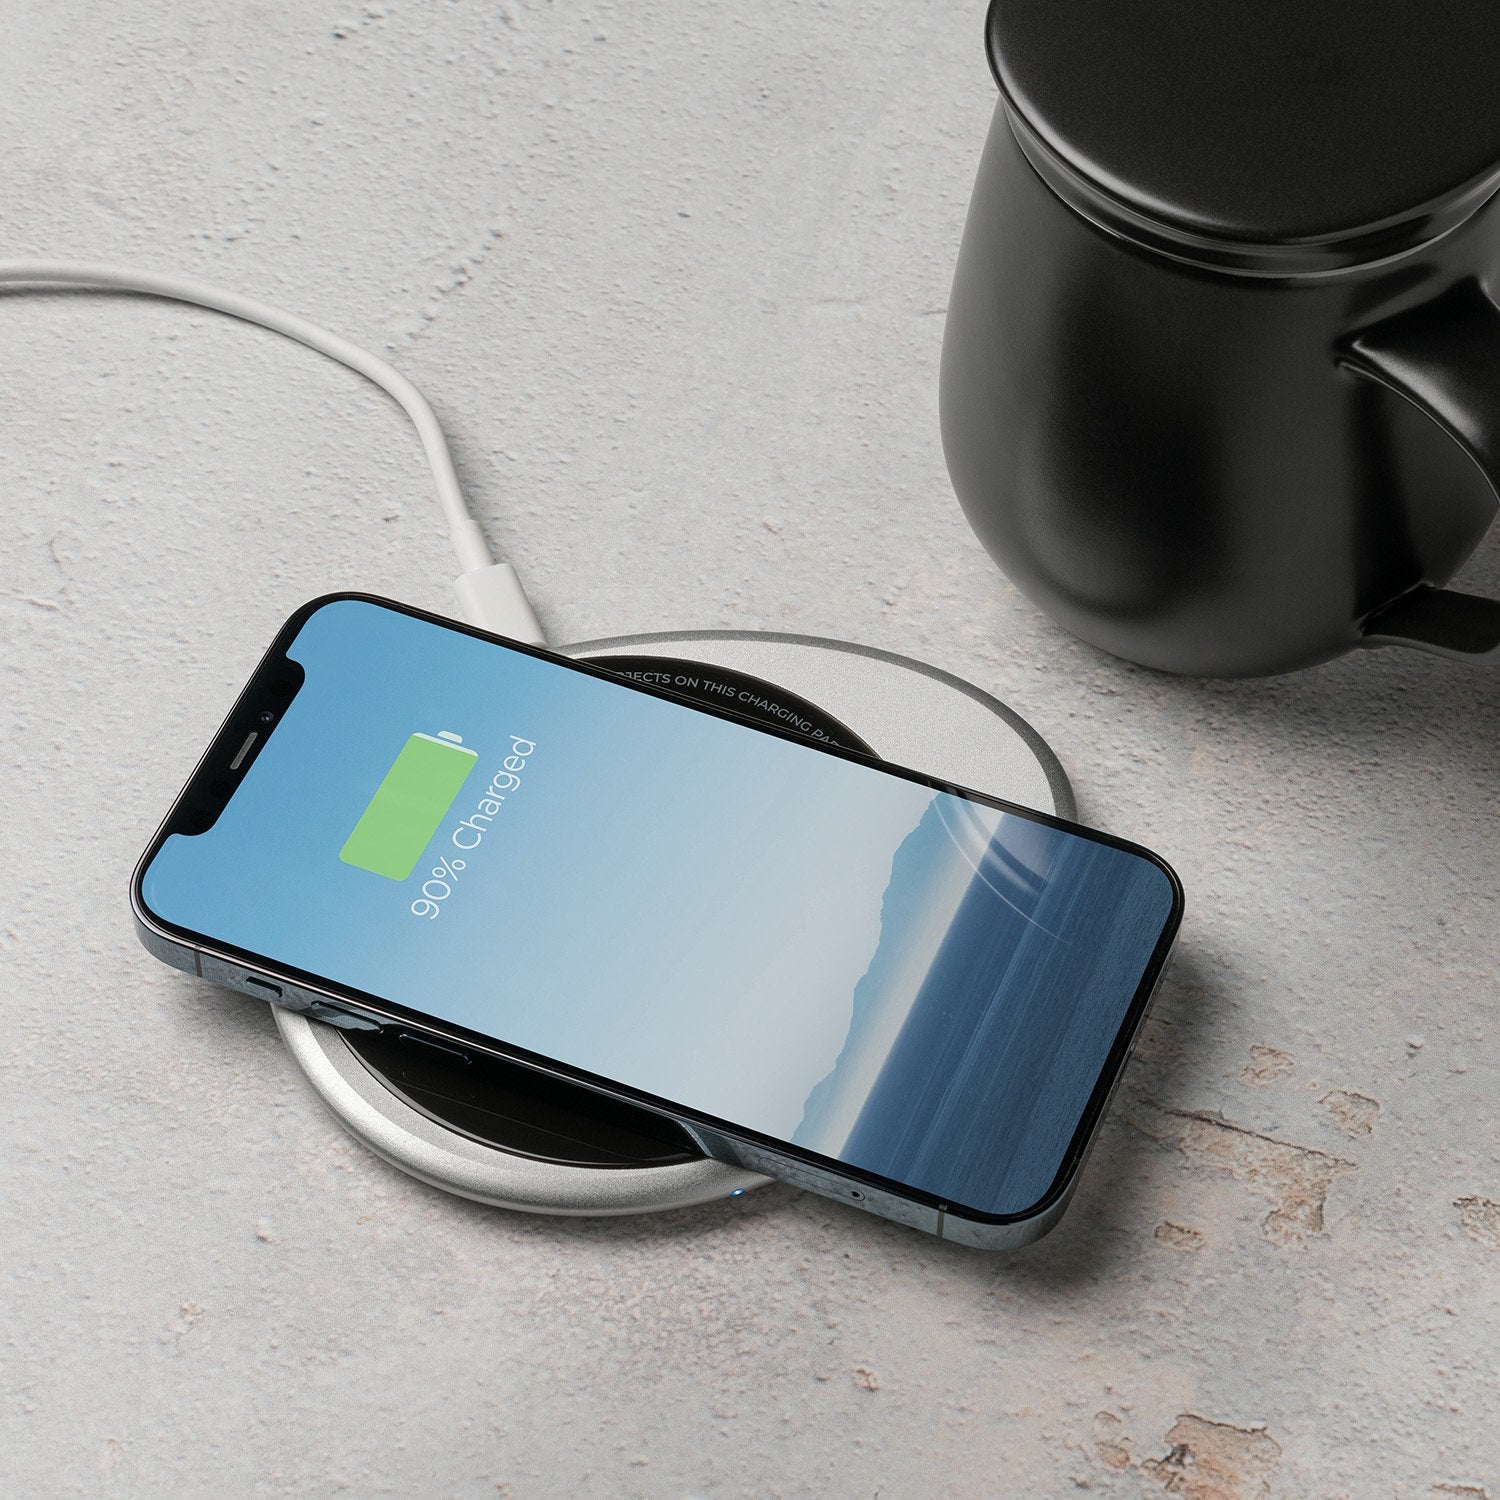 Black mug with lid next to phone on pebble charging pad